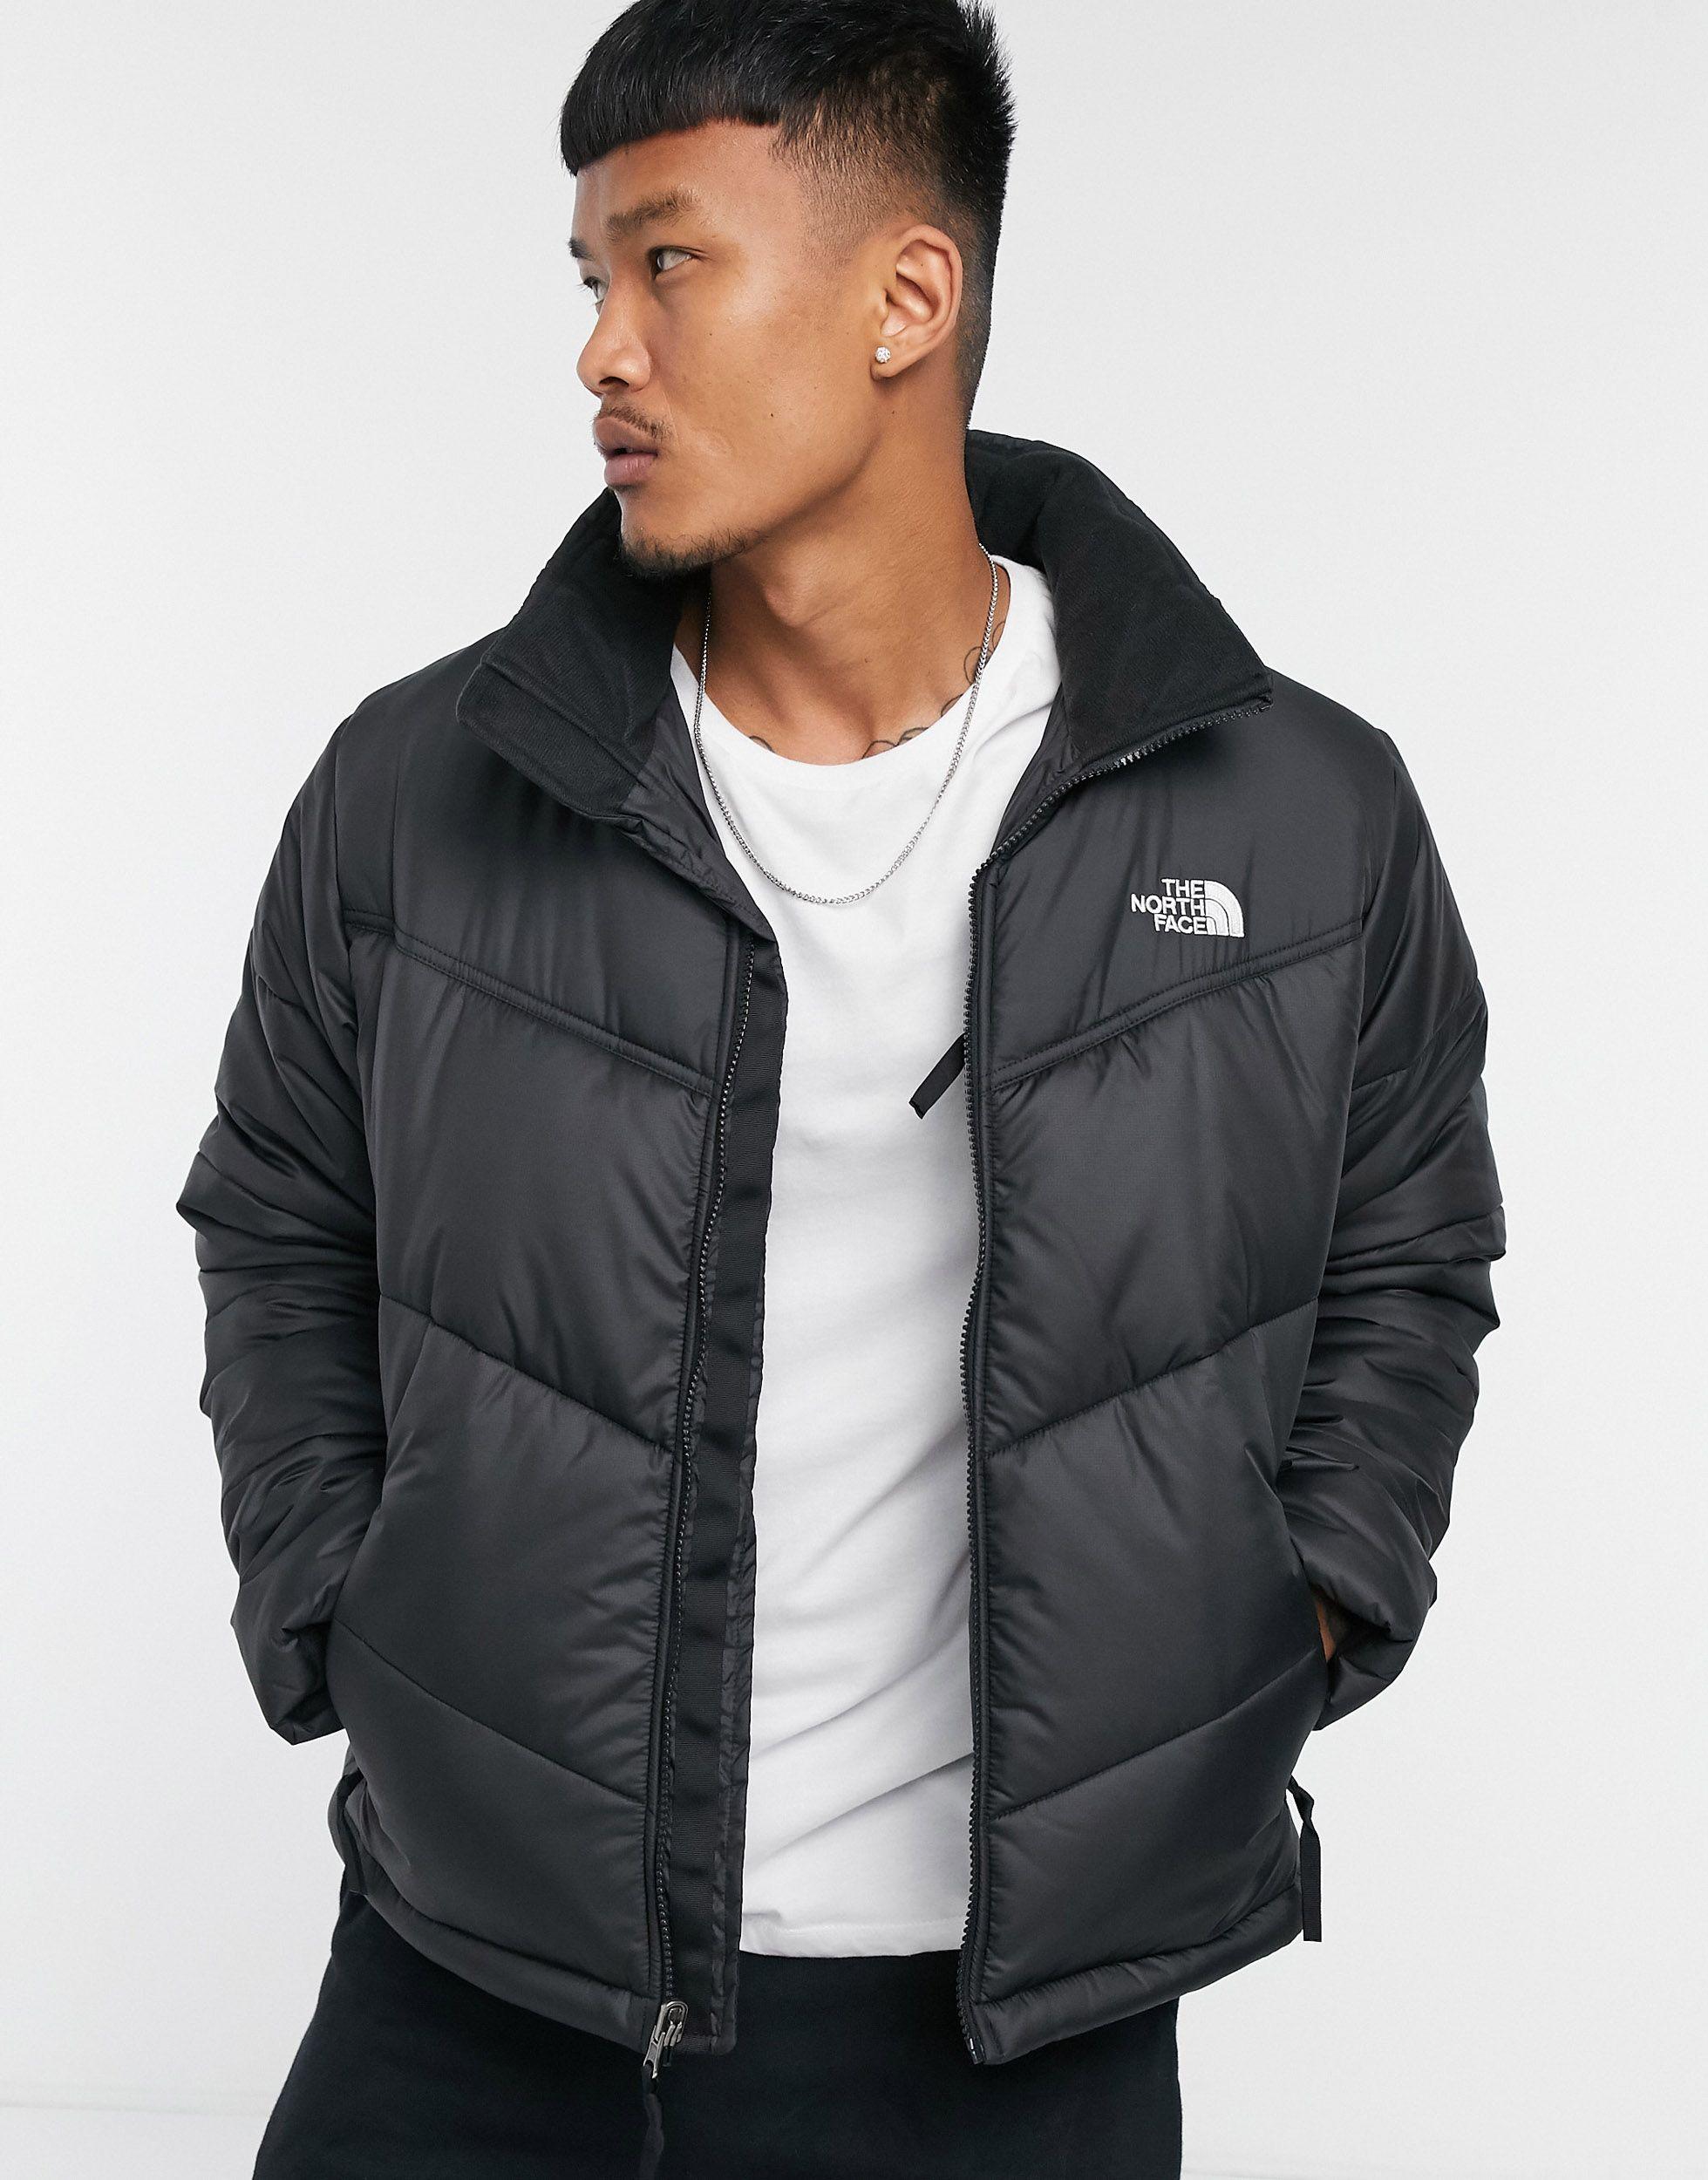 The North Face Saikuru Jacket in Black for Men - Save 23% - Lyst